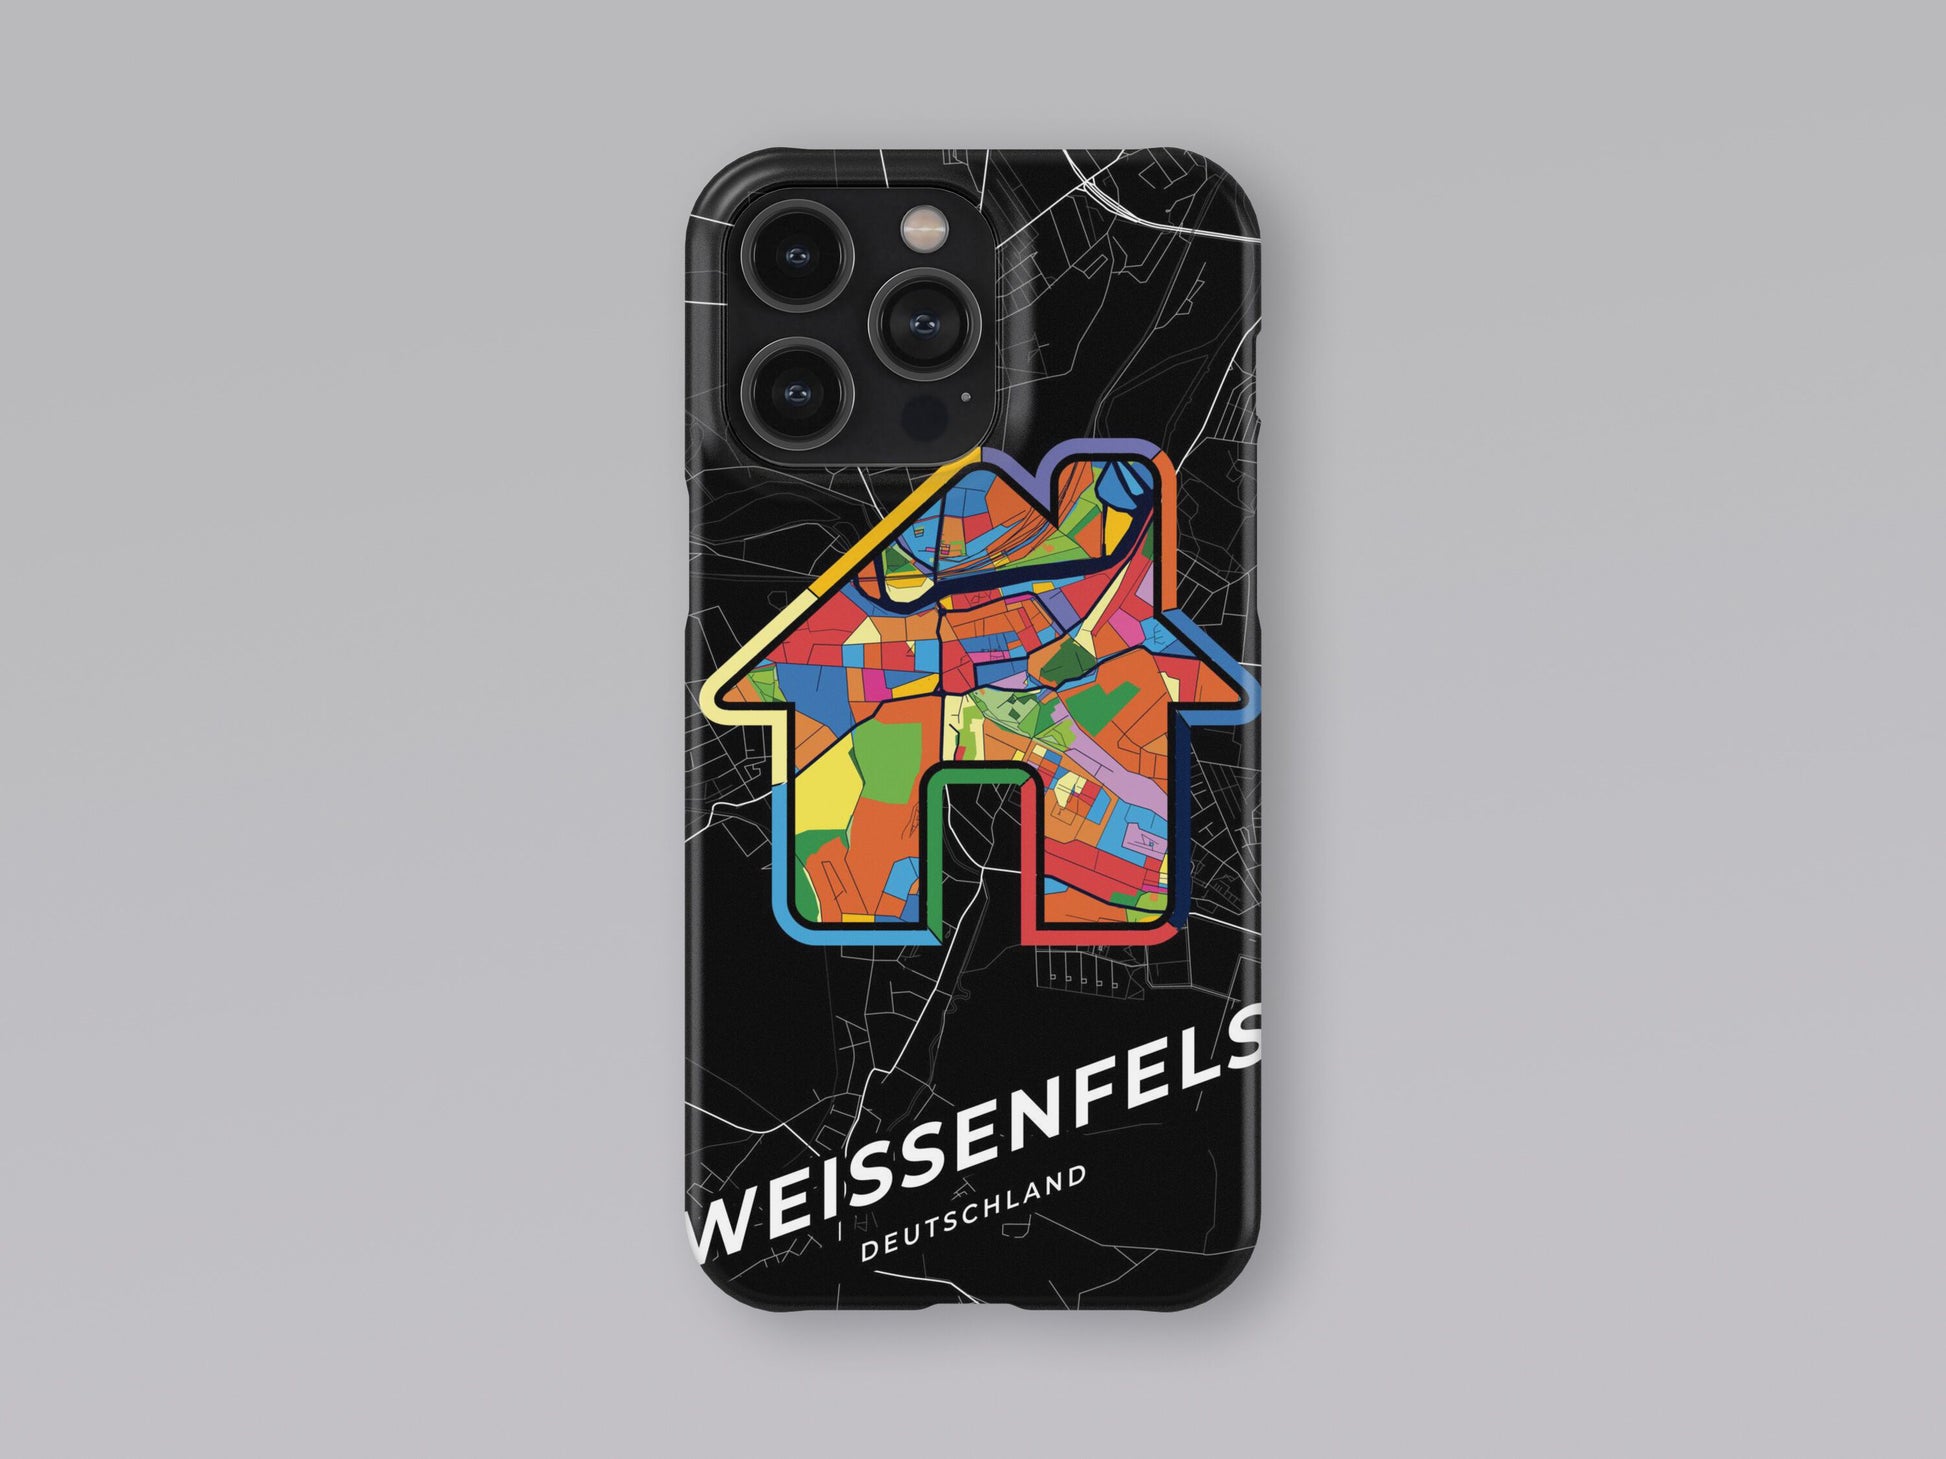 Weissenfels Deutschland slim phone case with colorful icon 3